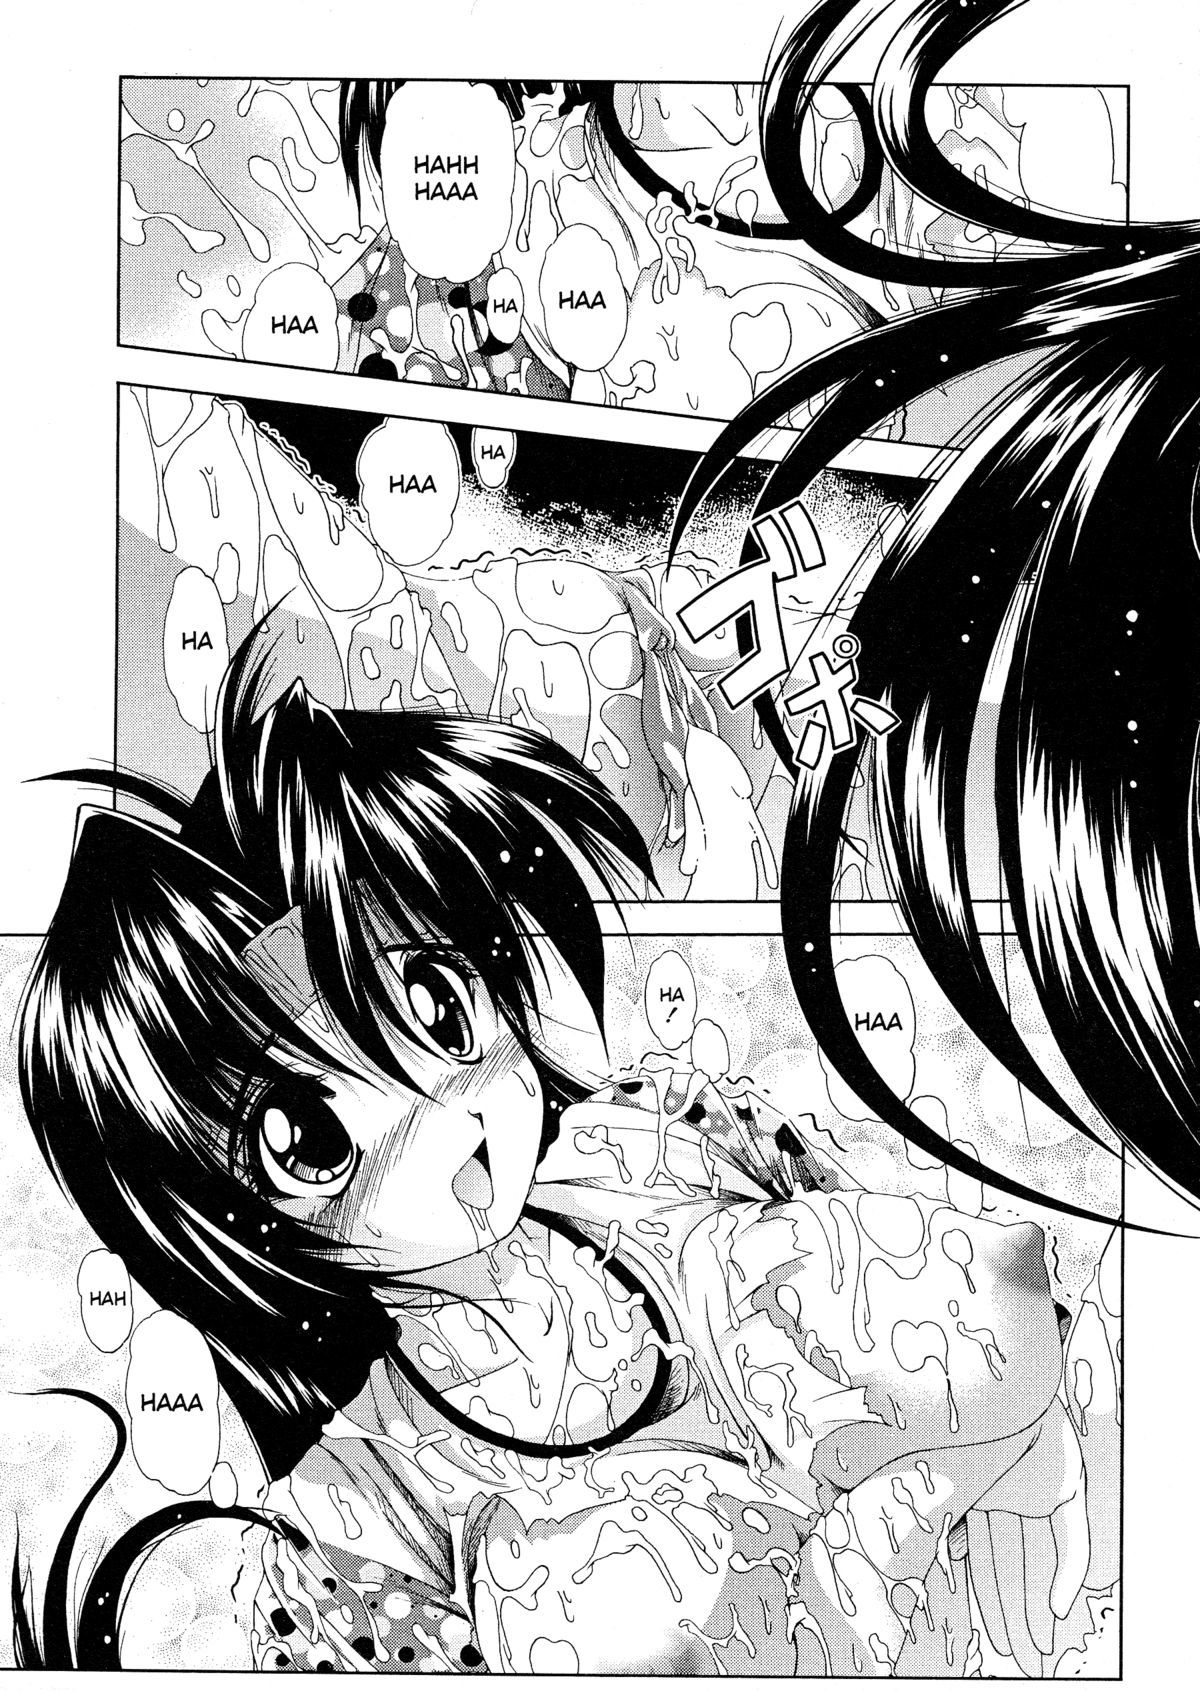 Flashbang!Hi-res 132 hentai manga